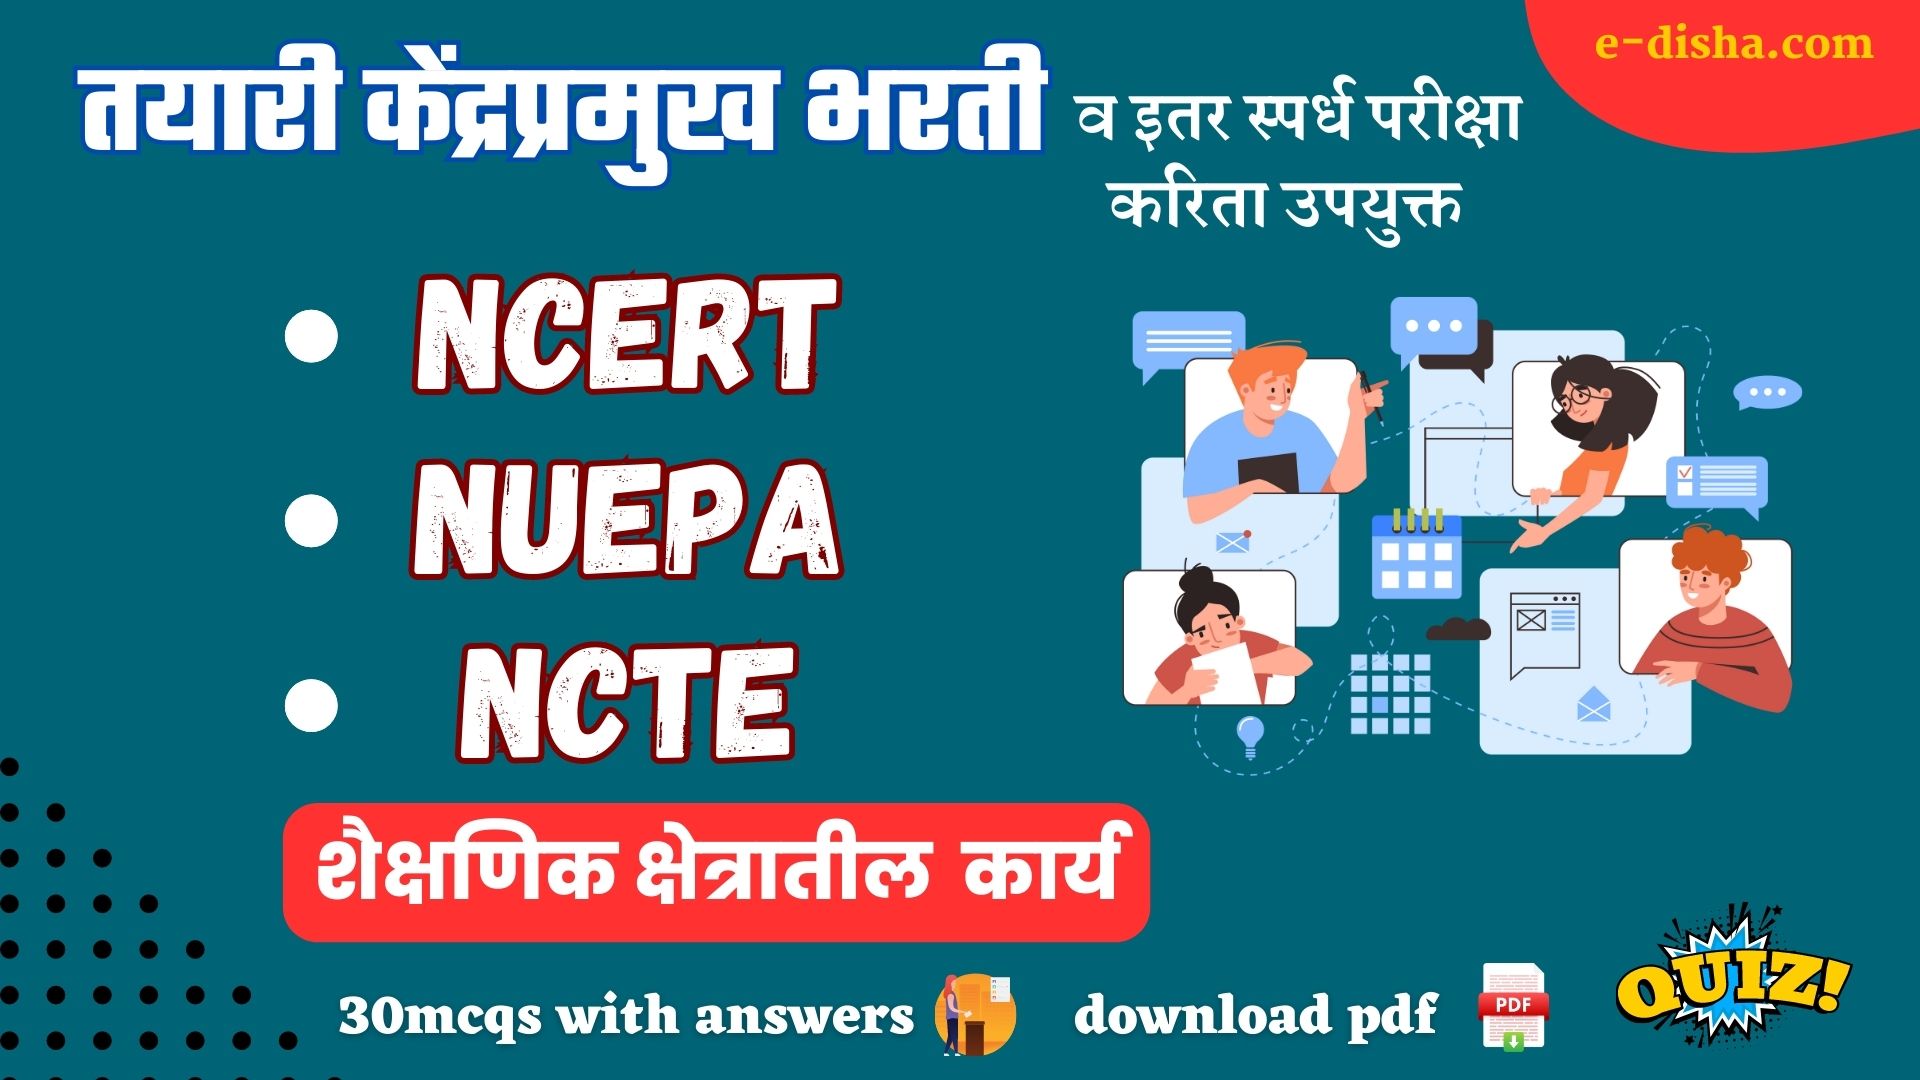 quiz; NCERT NUEPA NCTE Work in the field of education